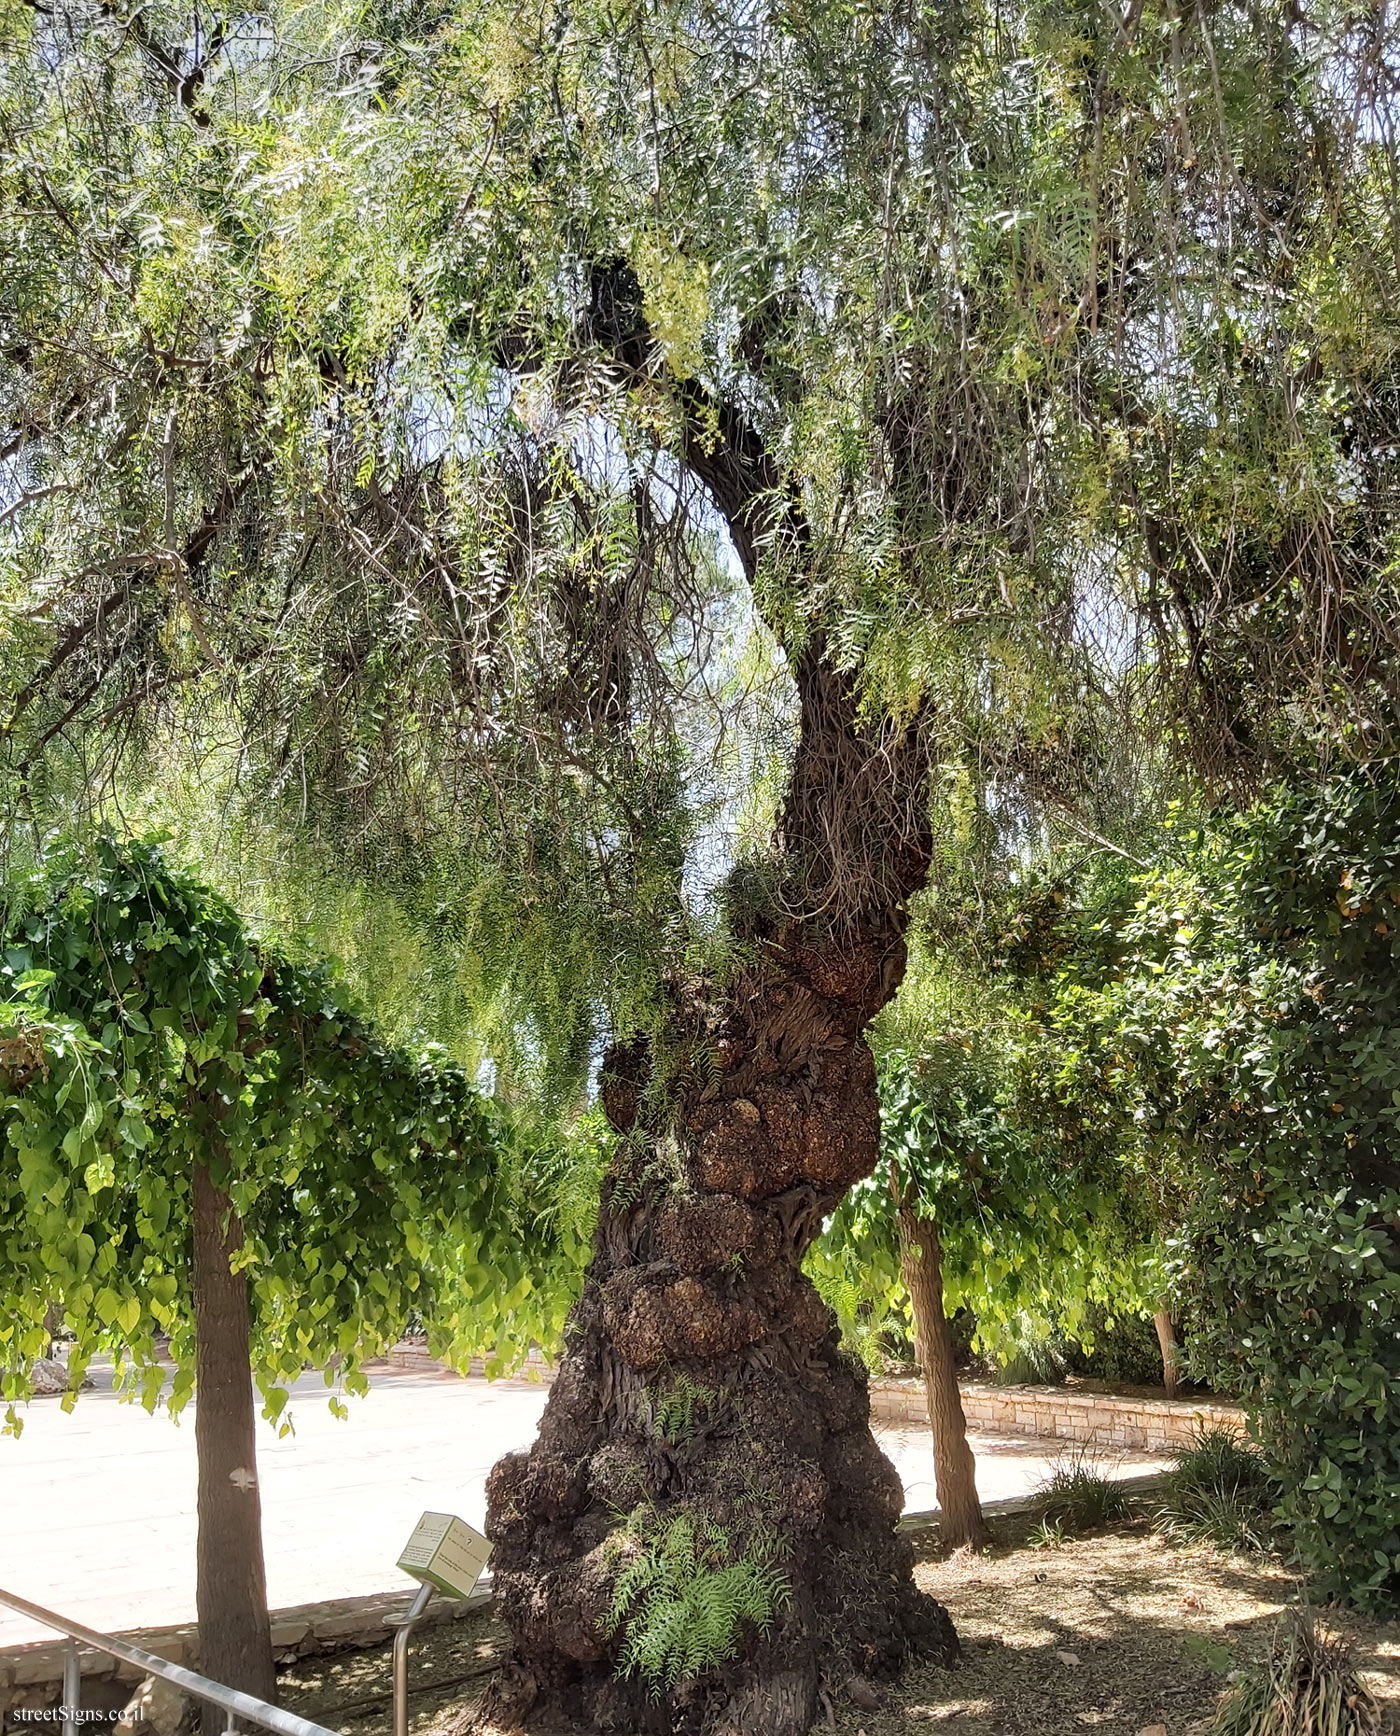 The Hebrew University of Jerusalem - Discovery Tree Walk - California Pepper Tree - Safra Campus